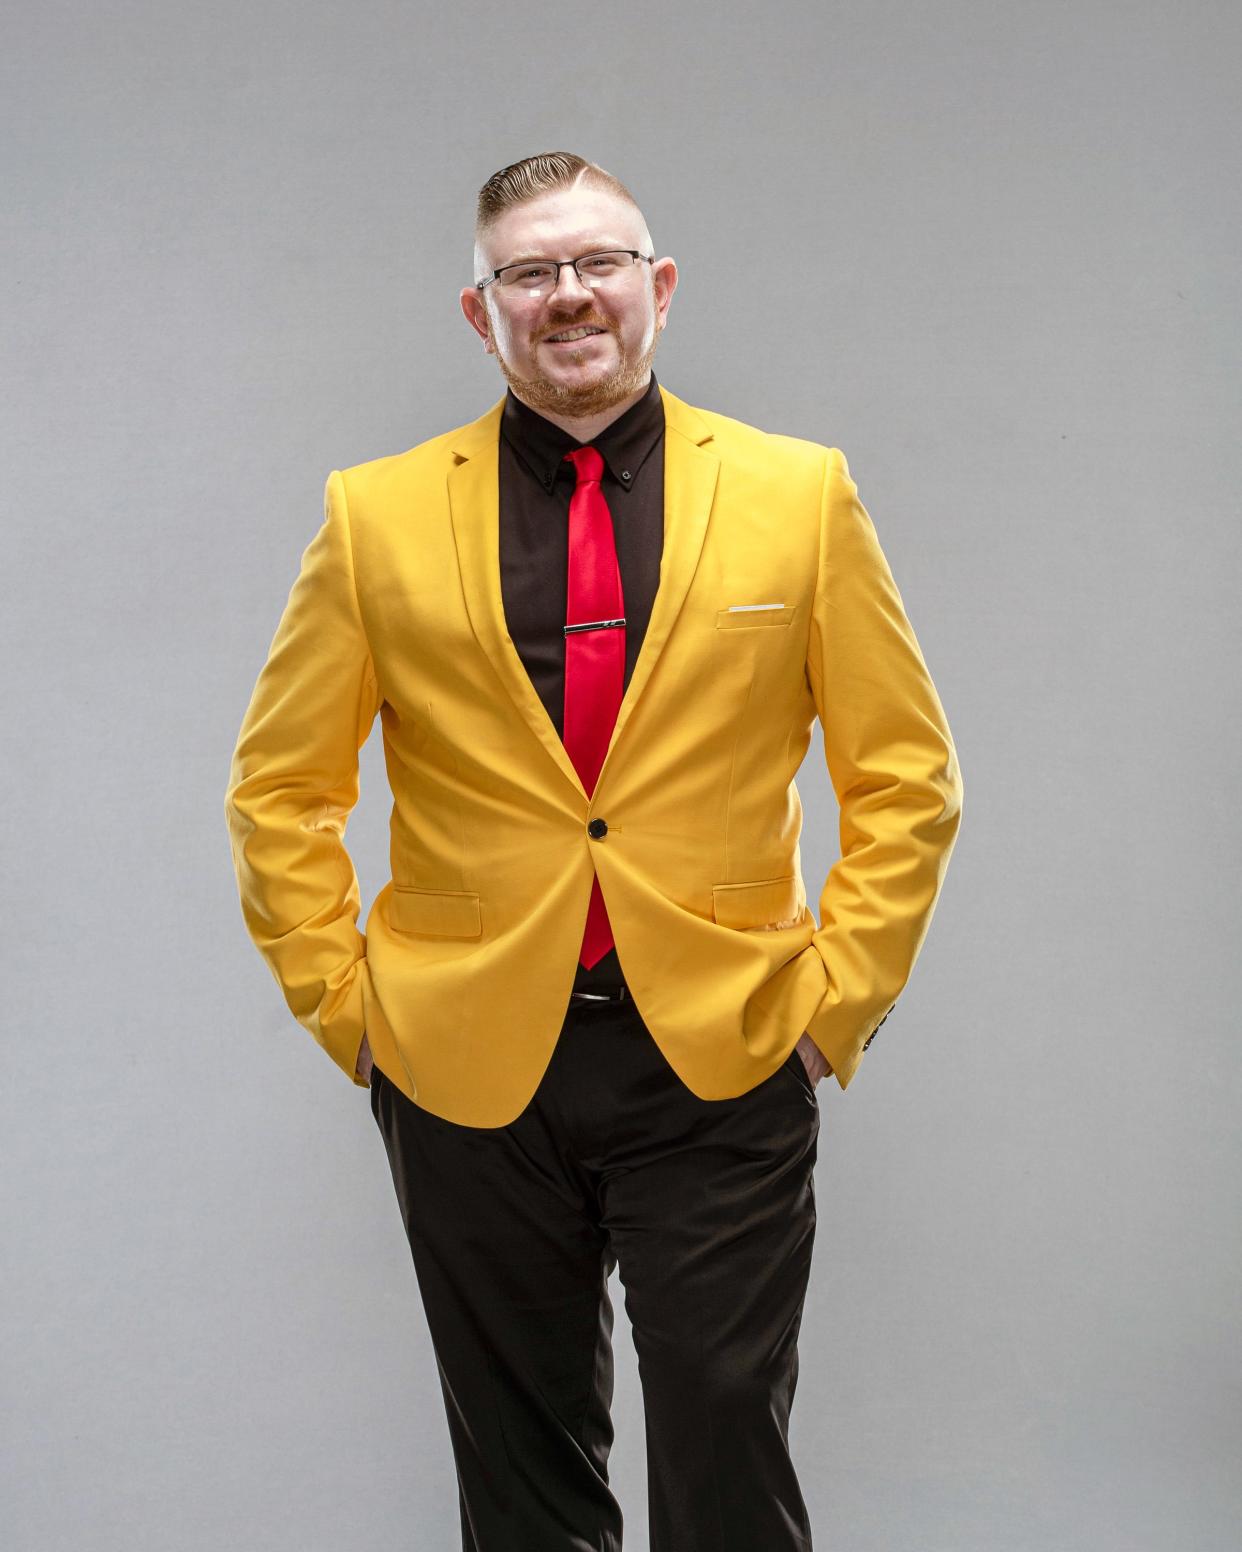 The Young Professor, AKA Matt Graifer, attired in a banana-yellow sport jacket.